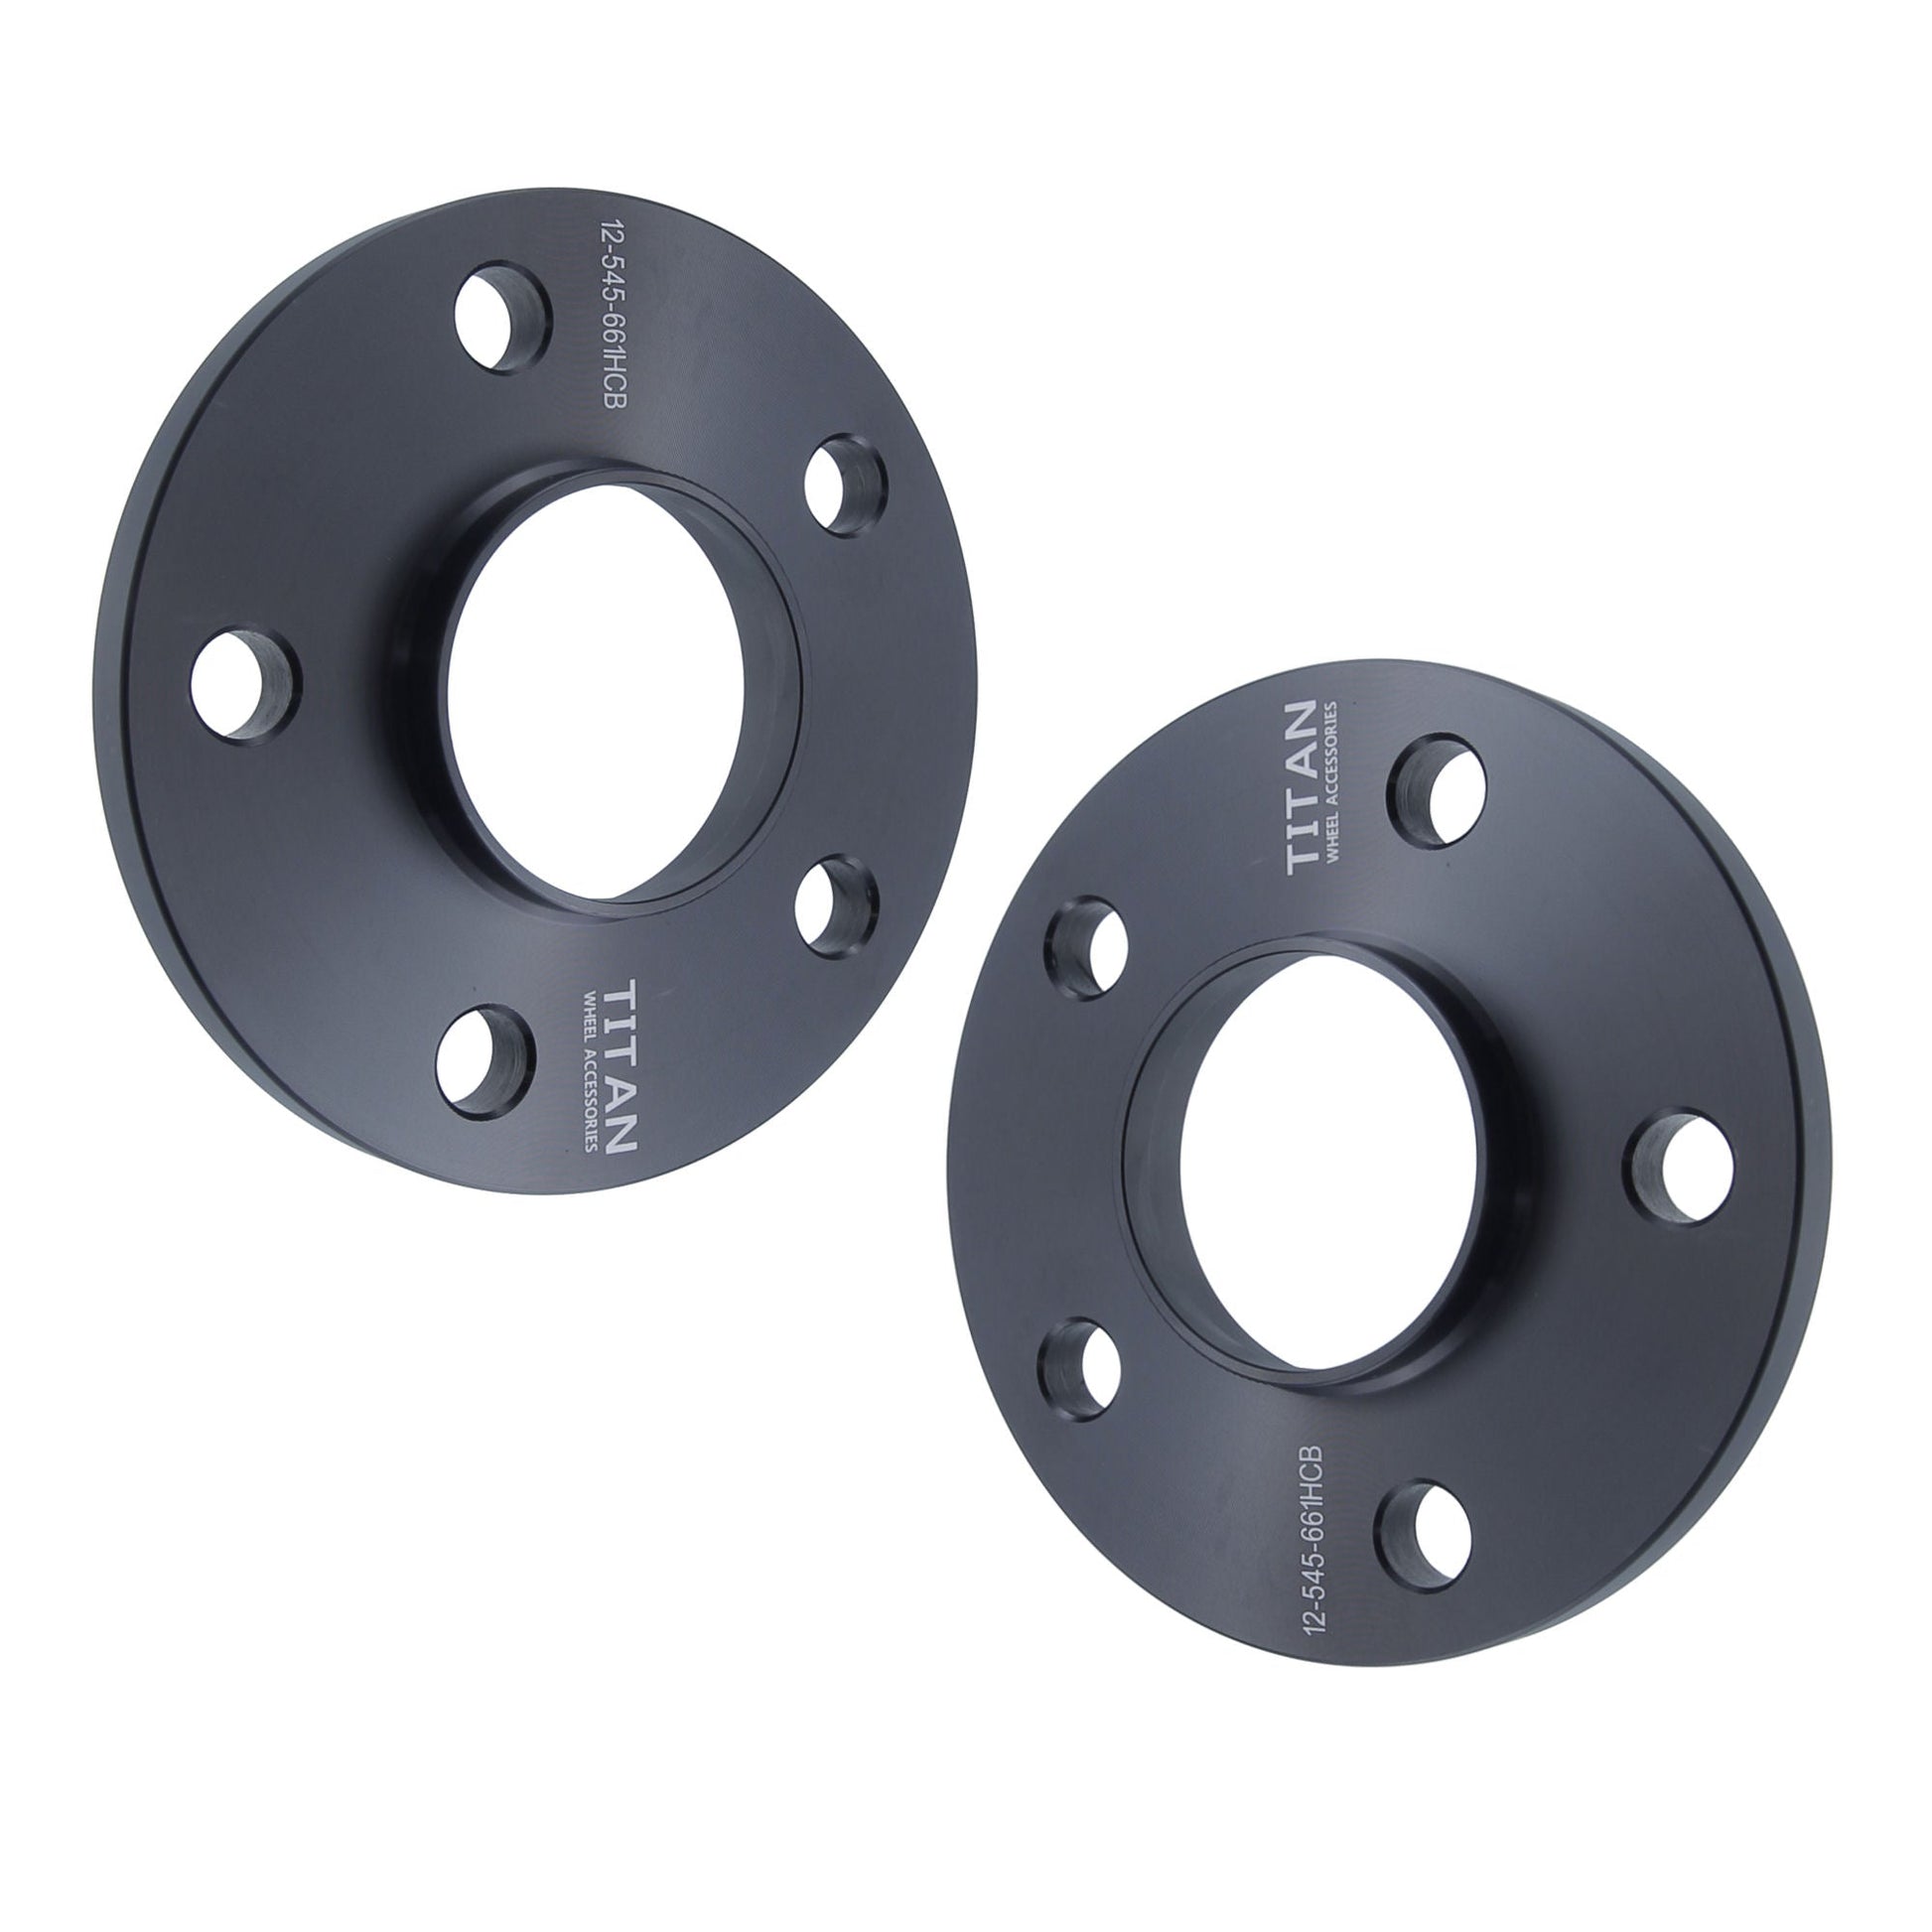 12mm Titan Wheel Spacers for Nissan Infiniti Q50 G37 G35 350Z 370Z Altima GTR | 5x114.3 | 66.1 Hubcentric | Set of 4 | Titan Wheel Accessories